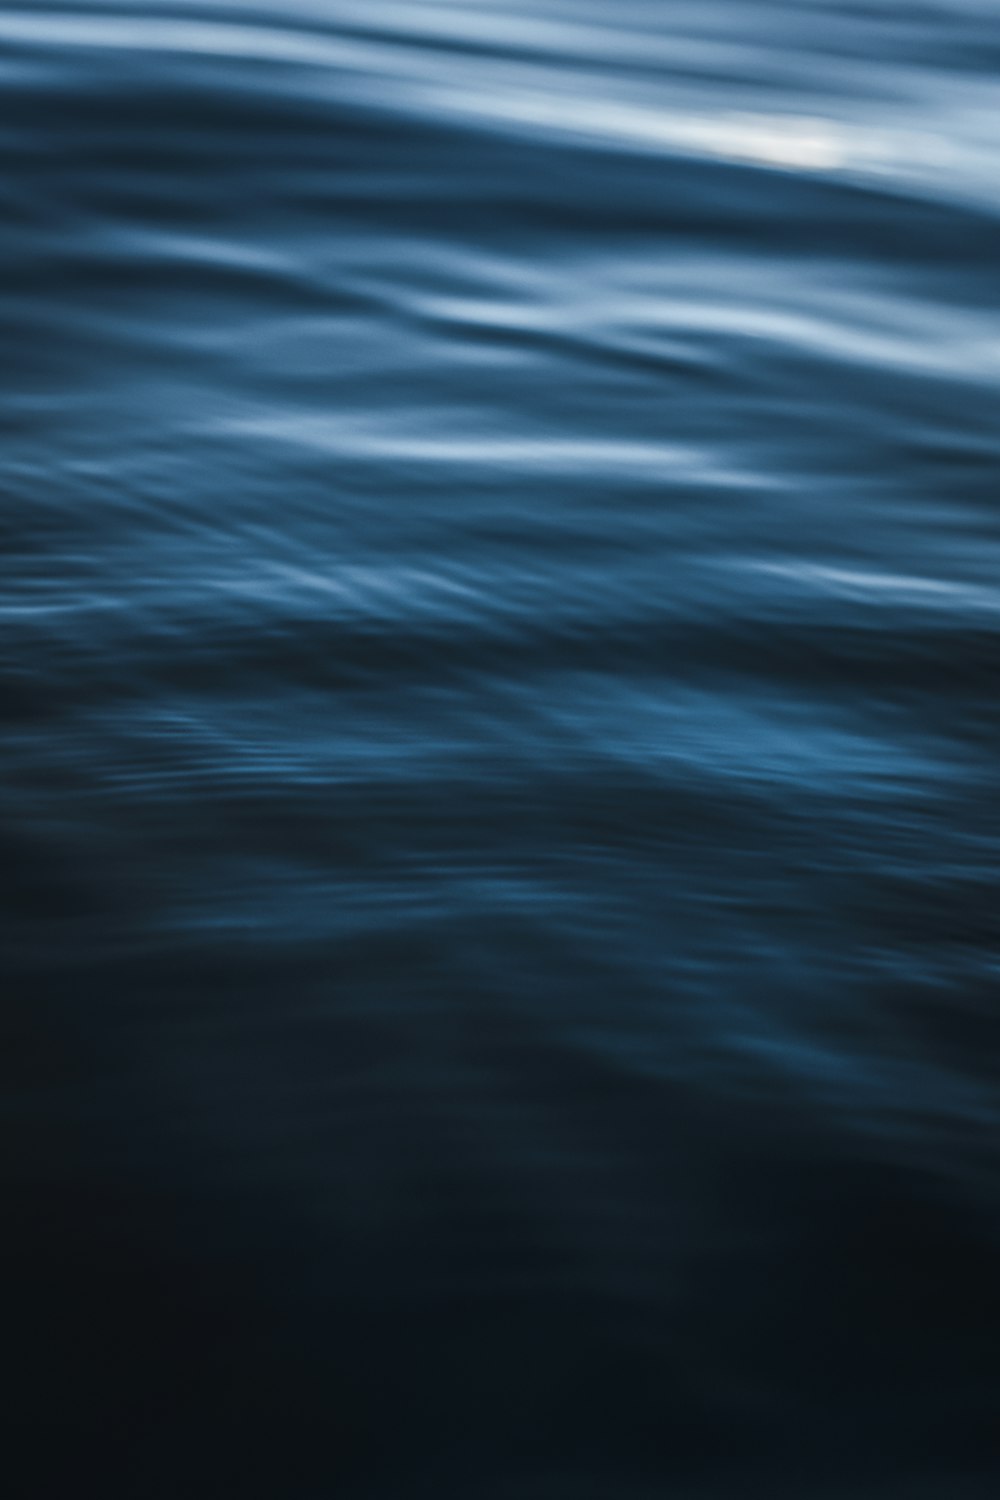 a dark blue surface